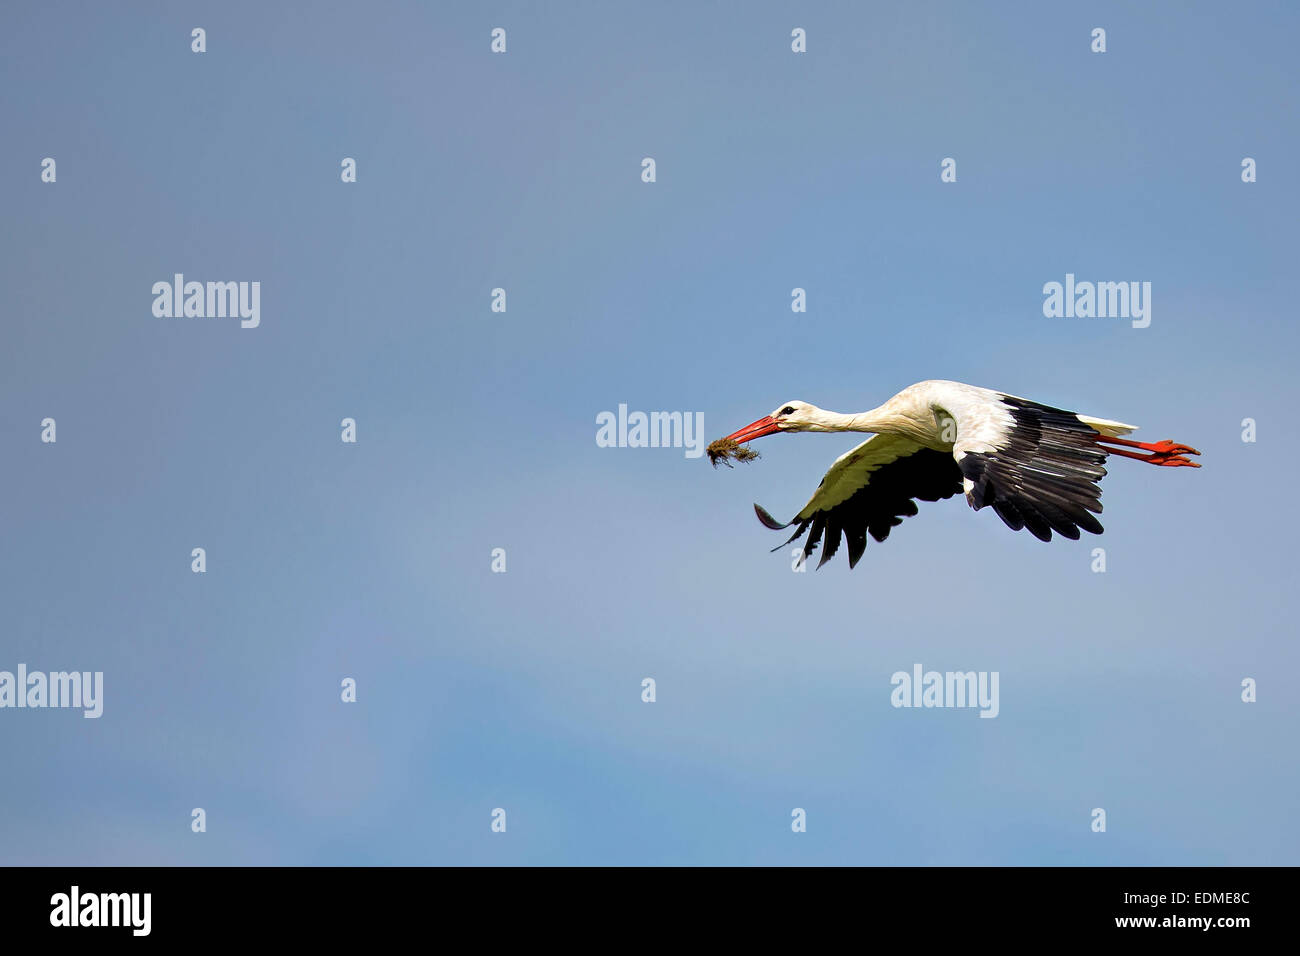 White stork in the flight Stock Photo